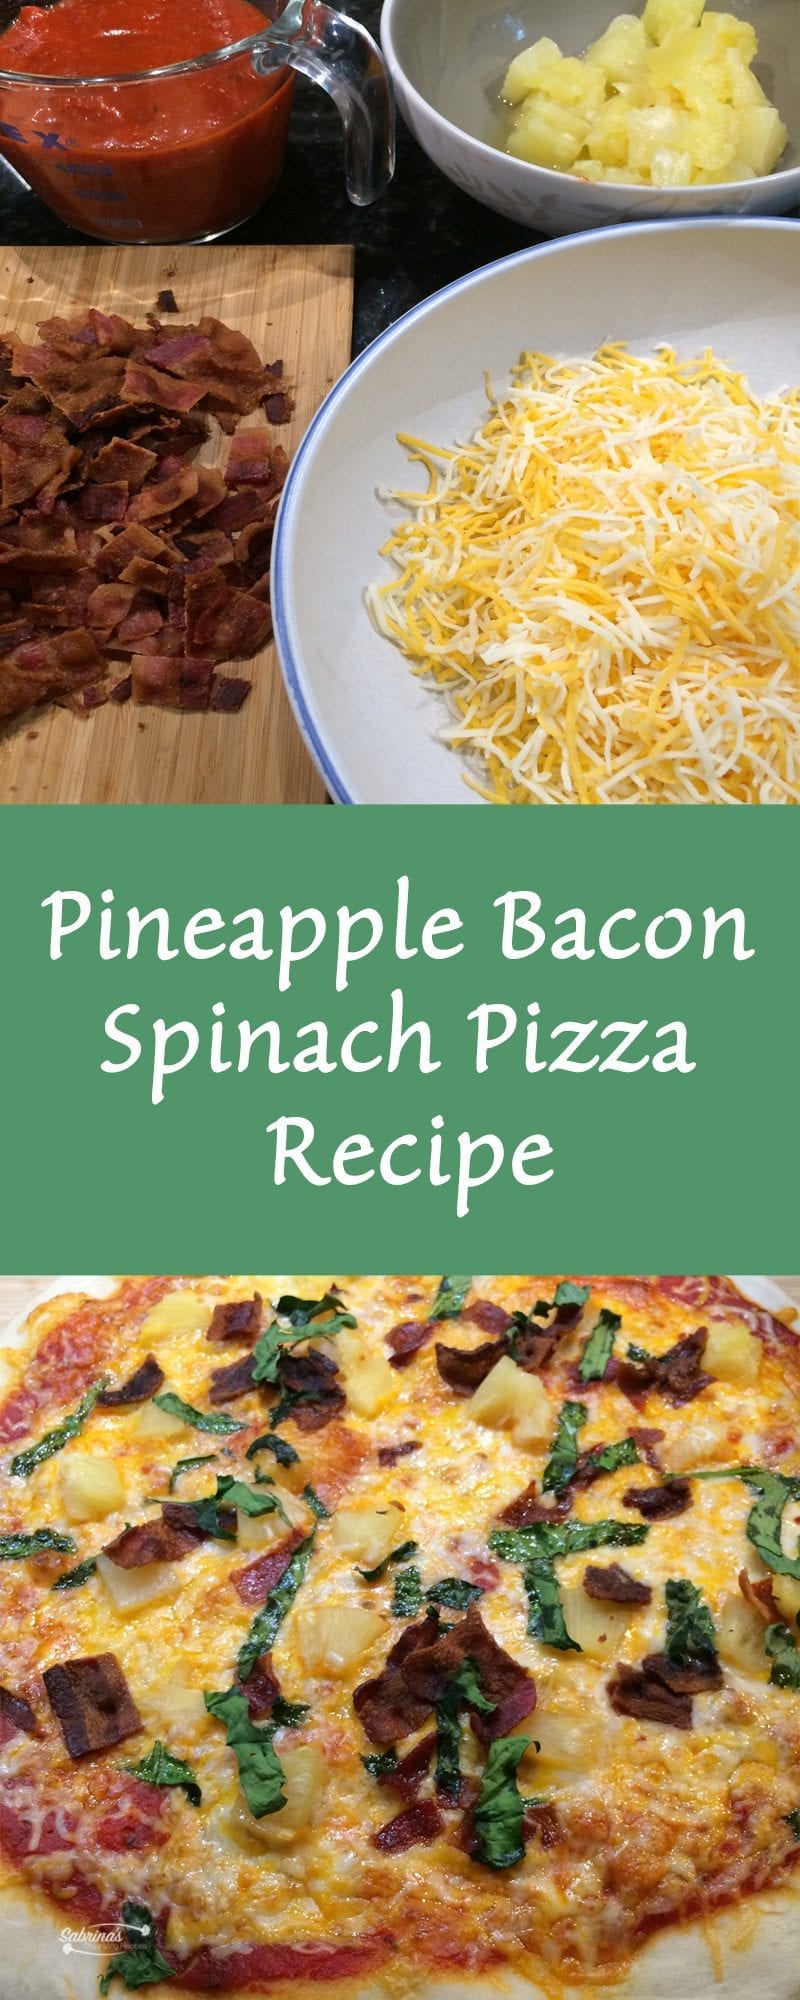 Pineapple Bacon Spinach Pizza Recipe